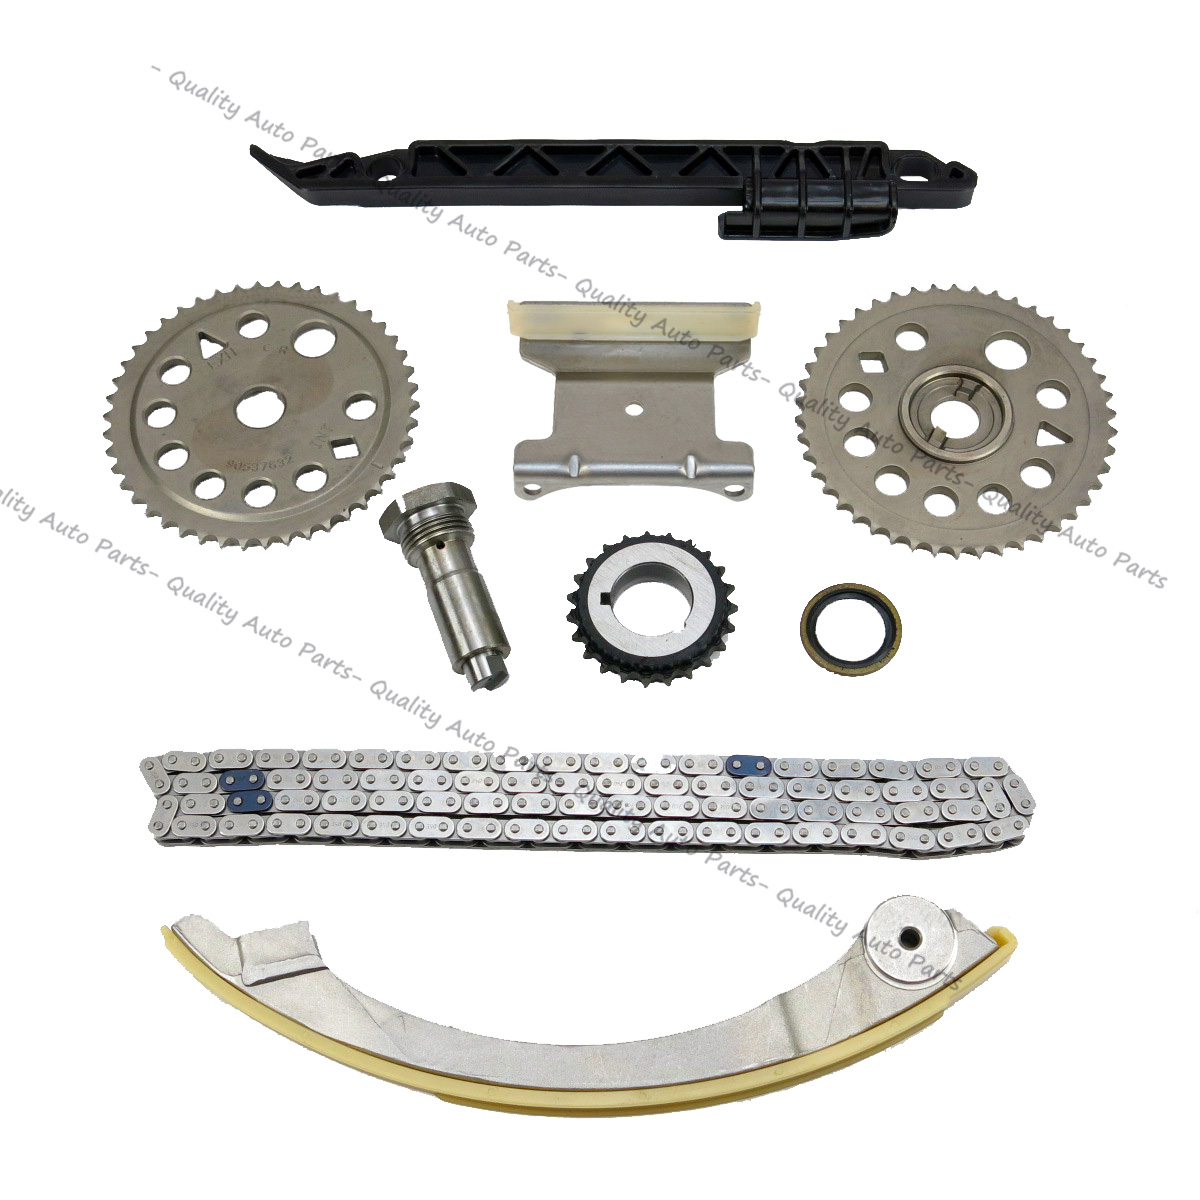 For CHEVROLET GM Malibu 2.0 2.2 DOHC Engine timing chain kit | eBay